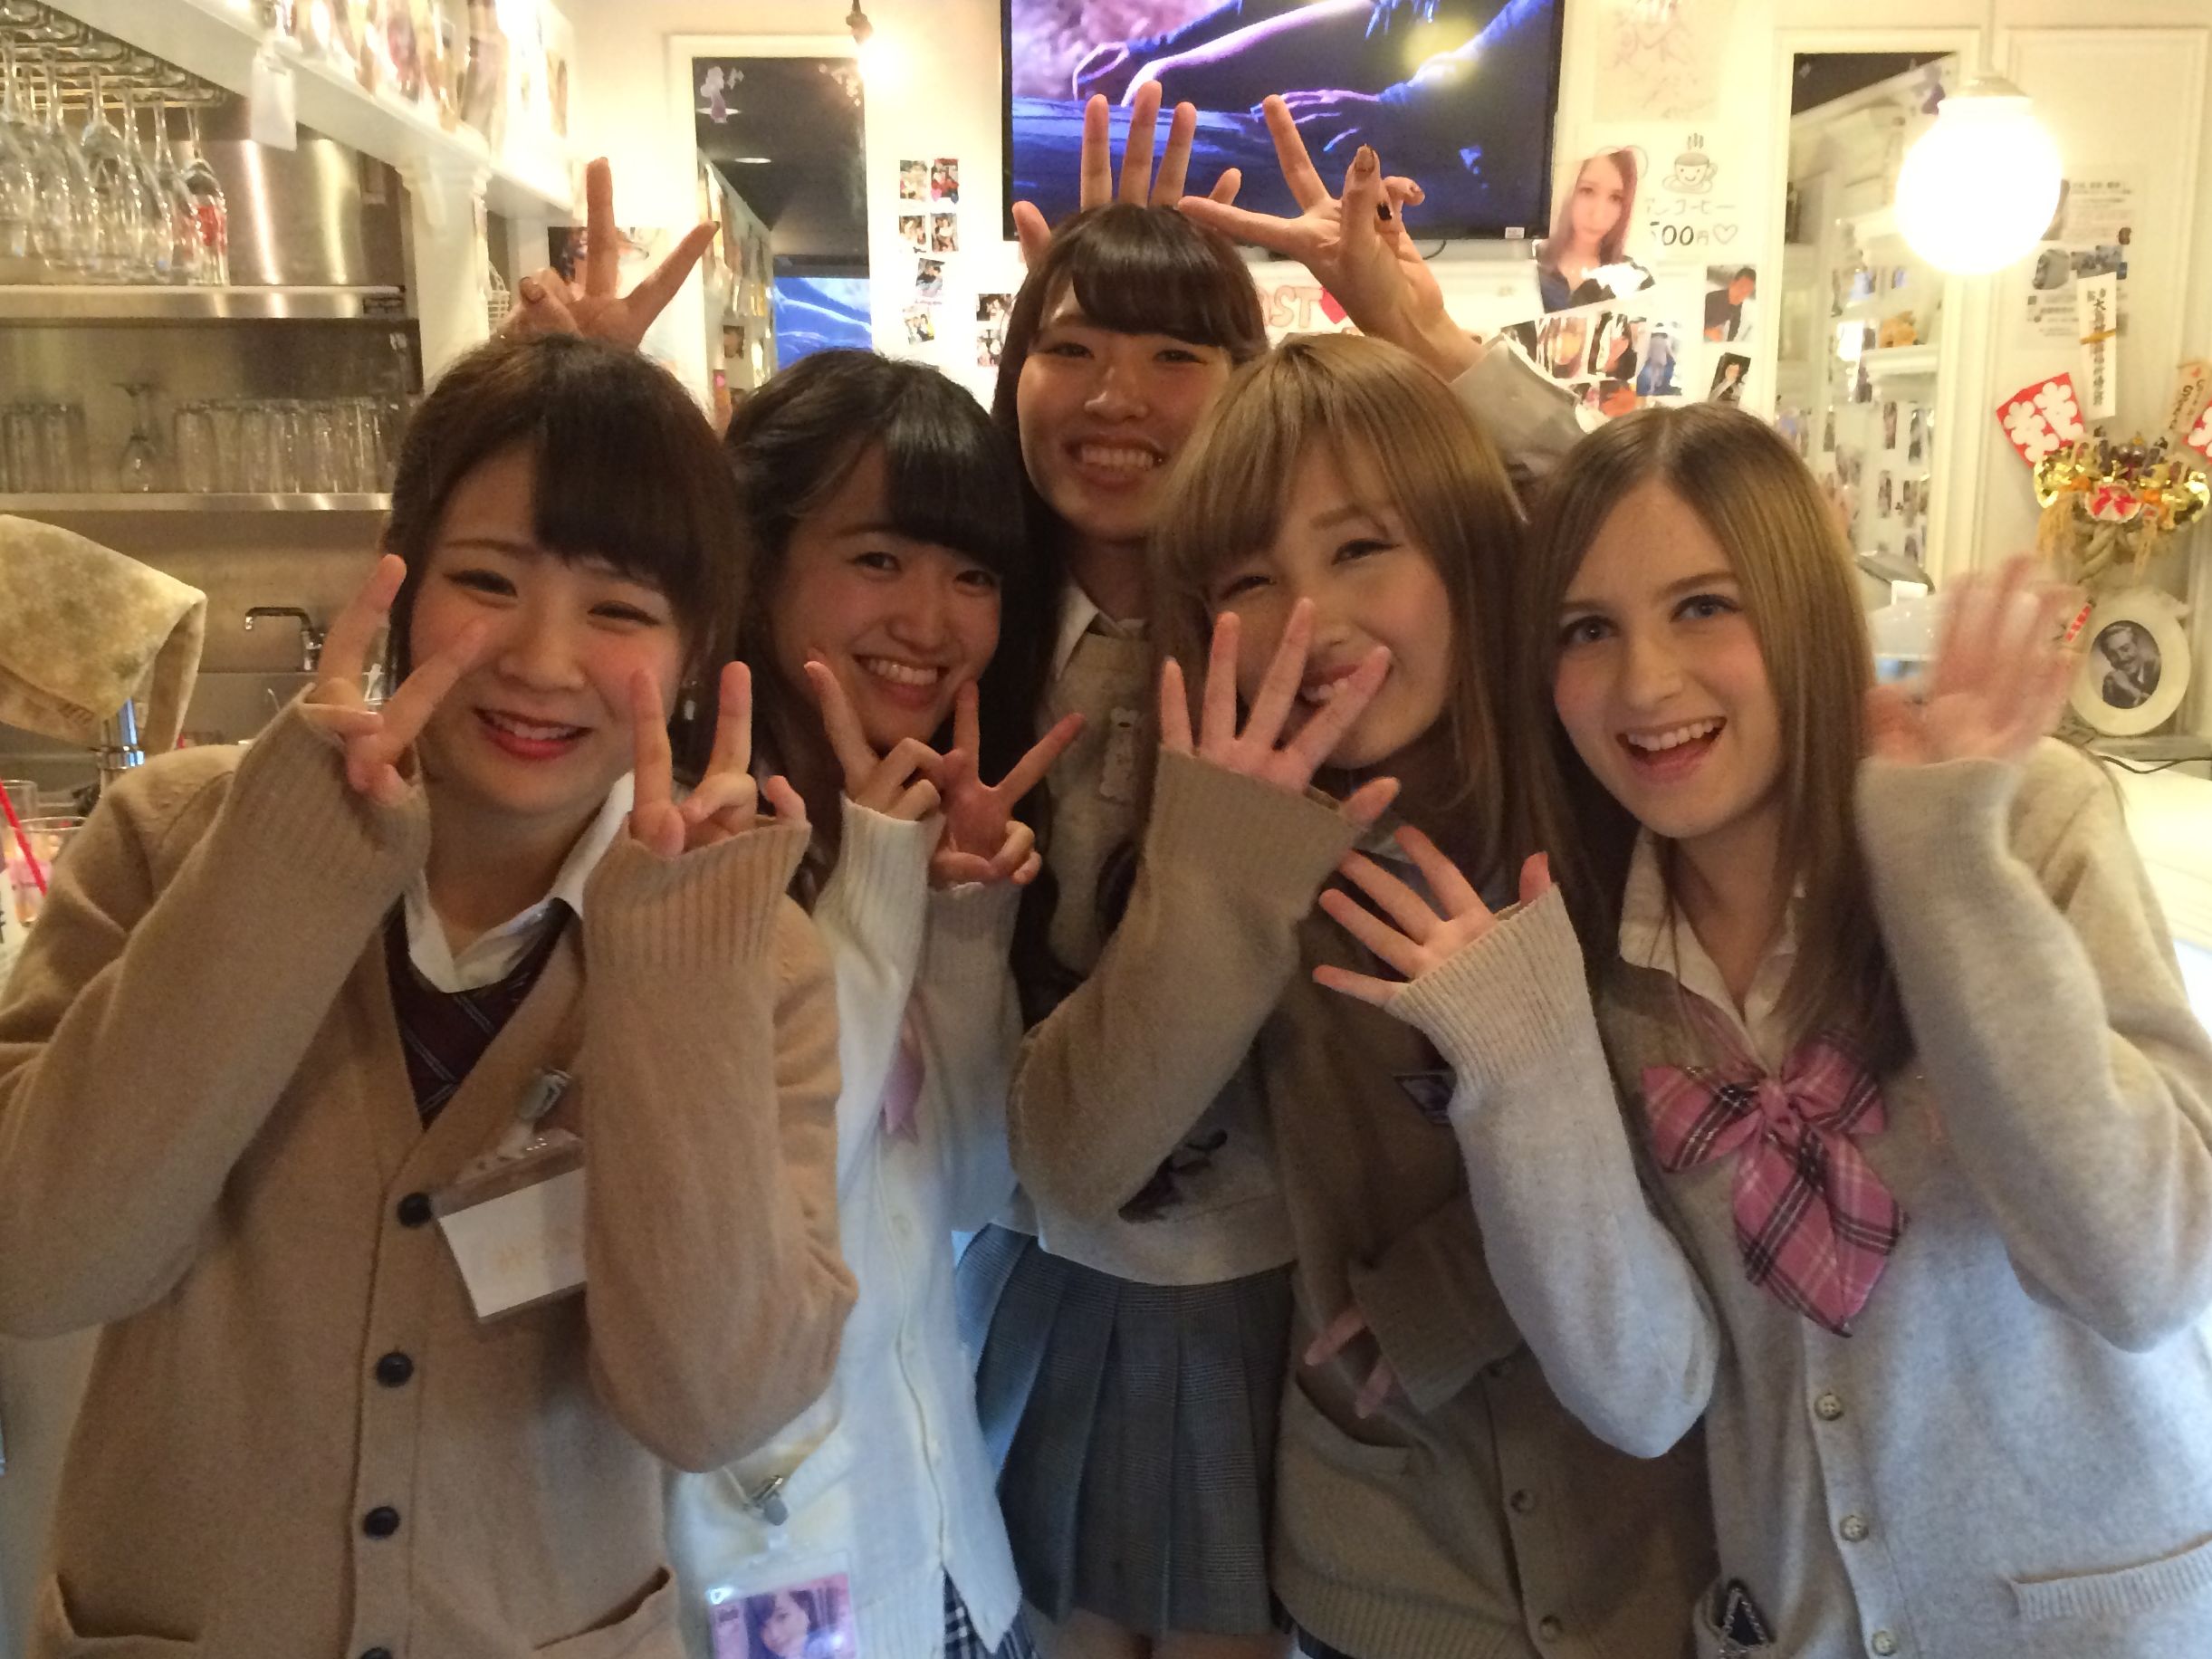 Japanese Schoolgirl Classroom - Japan school girl culture: The dark truth | CNN